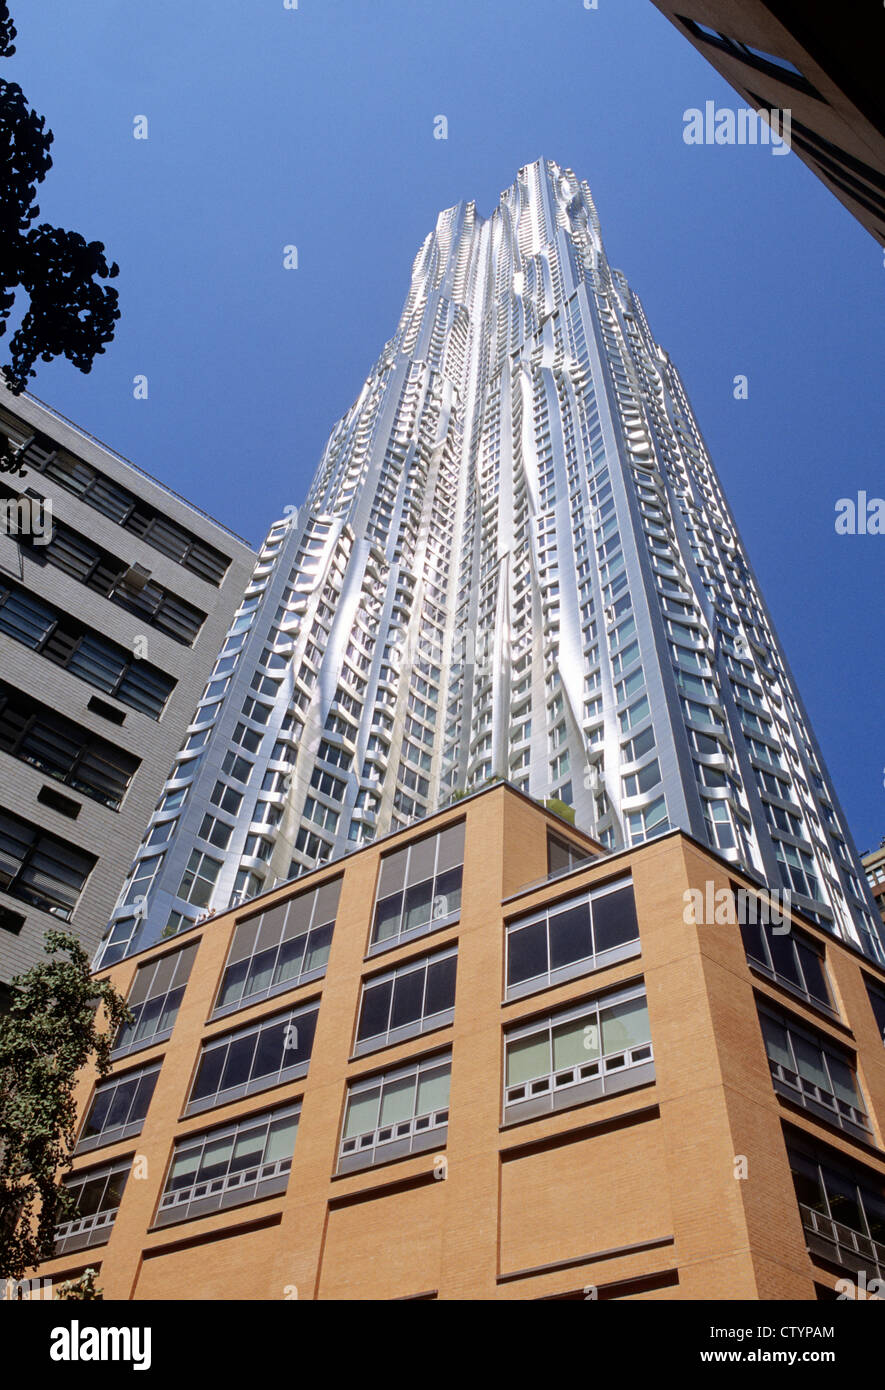 Frank Gehry 8 Spruce Street Building Beekman Tower New York City Lower Manhattan residential skyscraper. Stock Photo